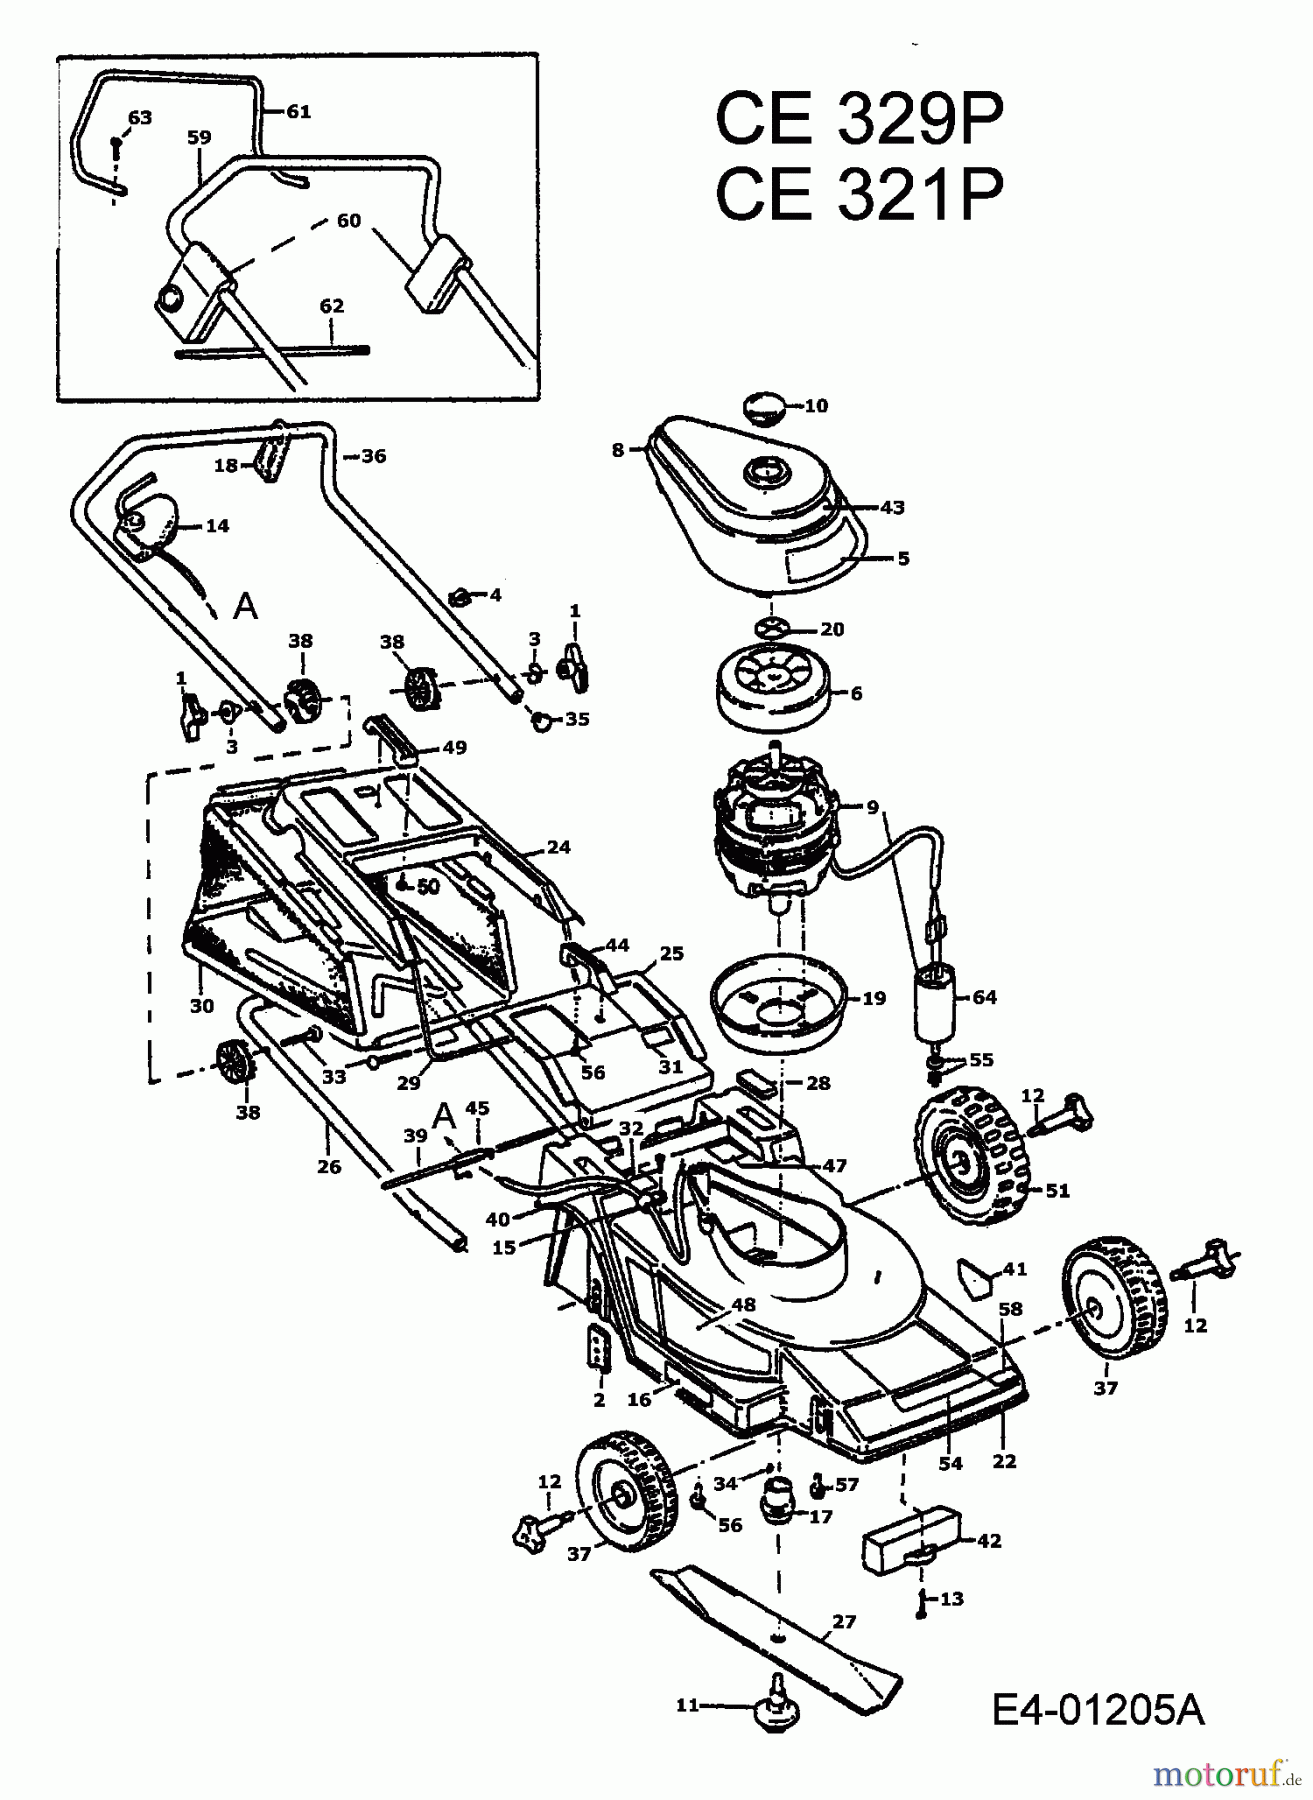  MTD Electric mower CE 329 P 901E322P001  (1994) Basic machine